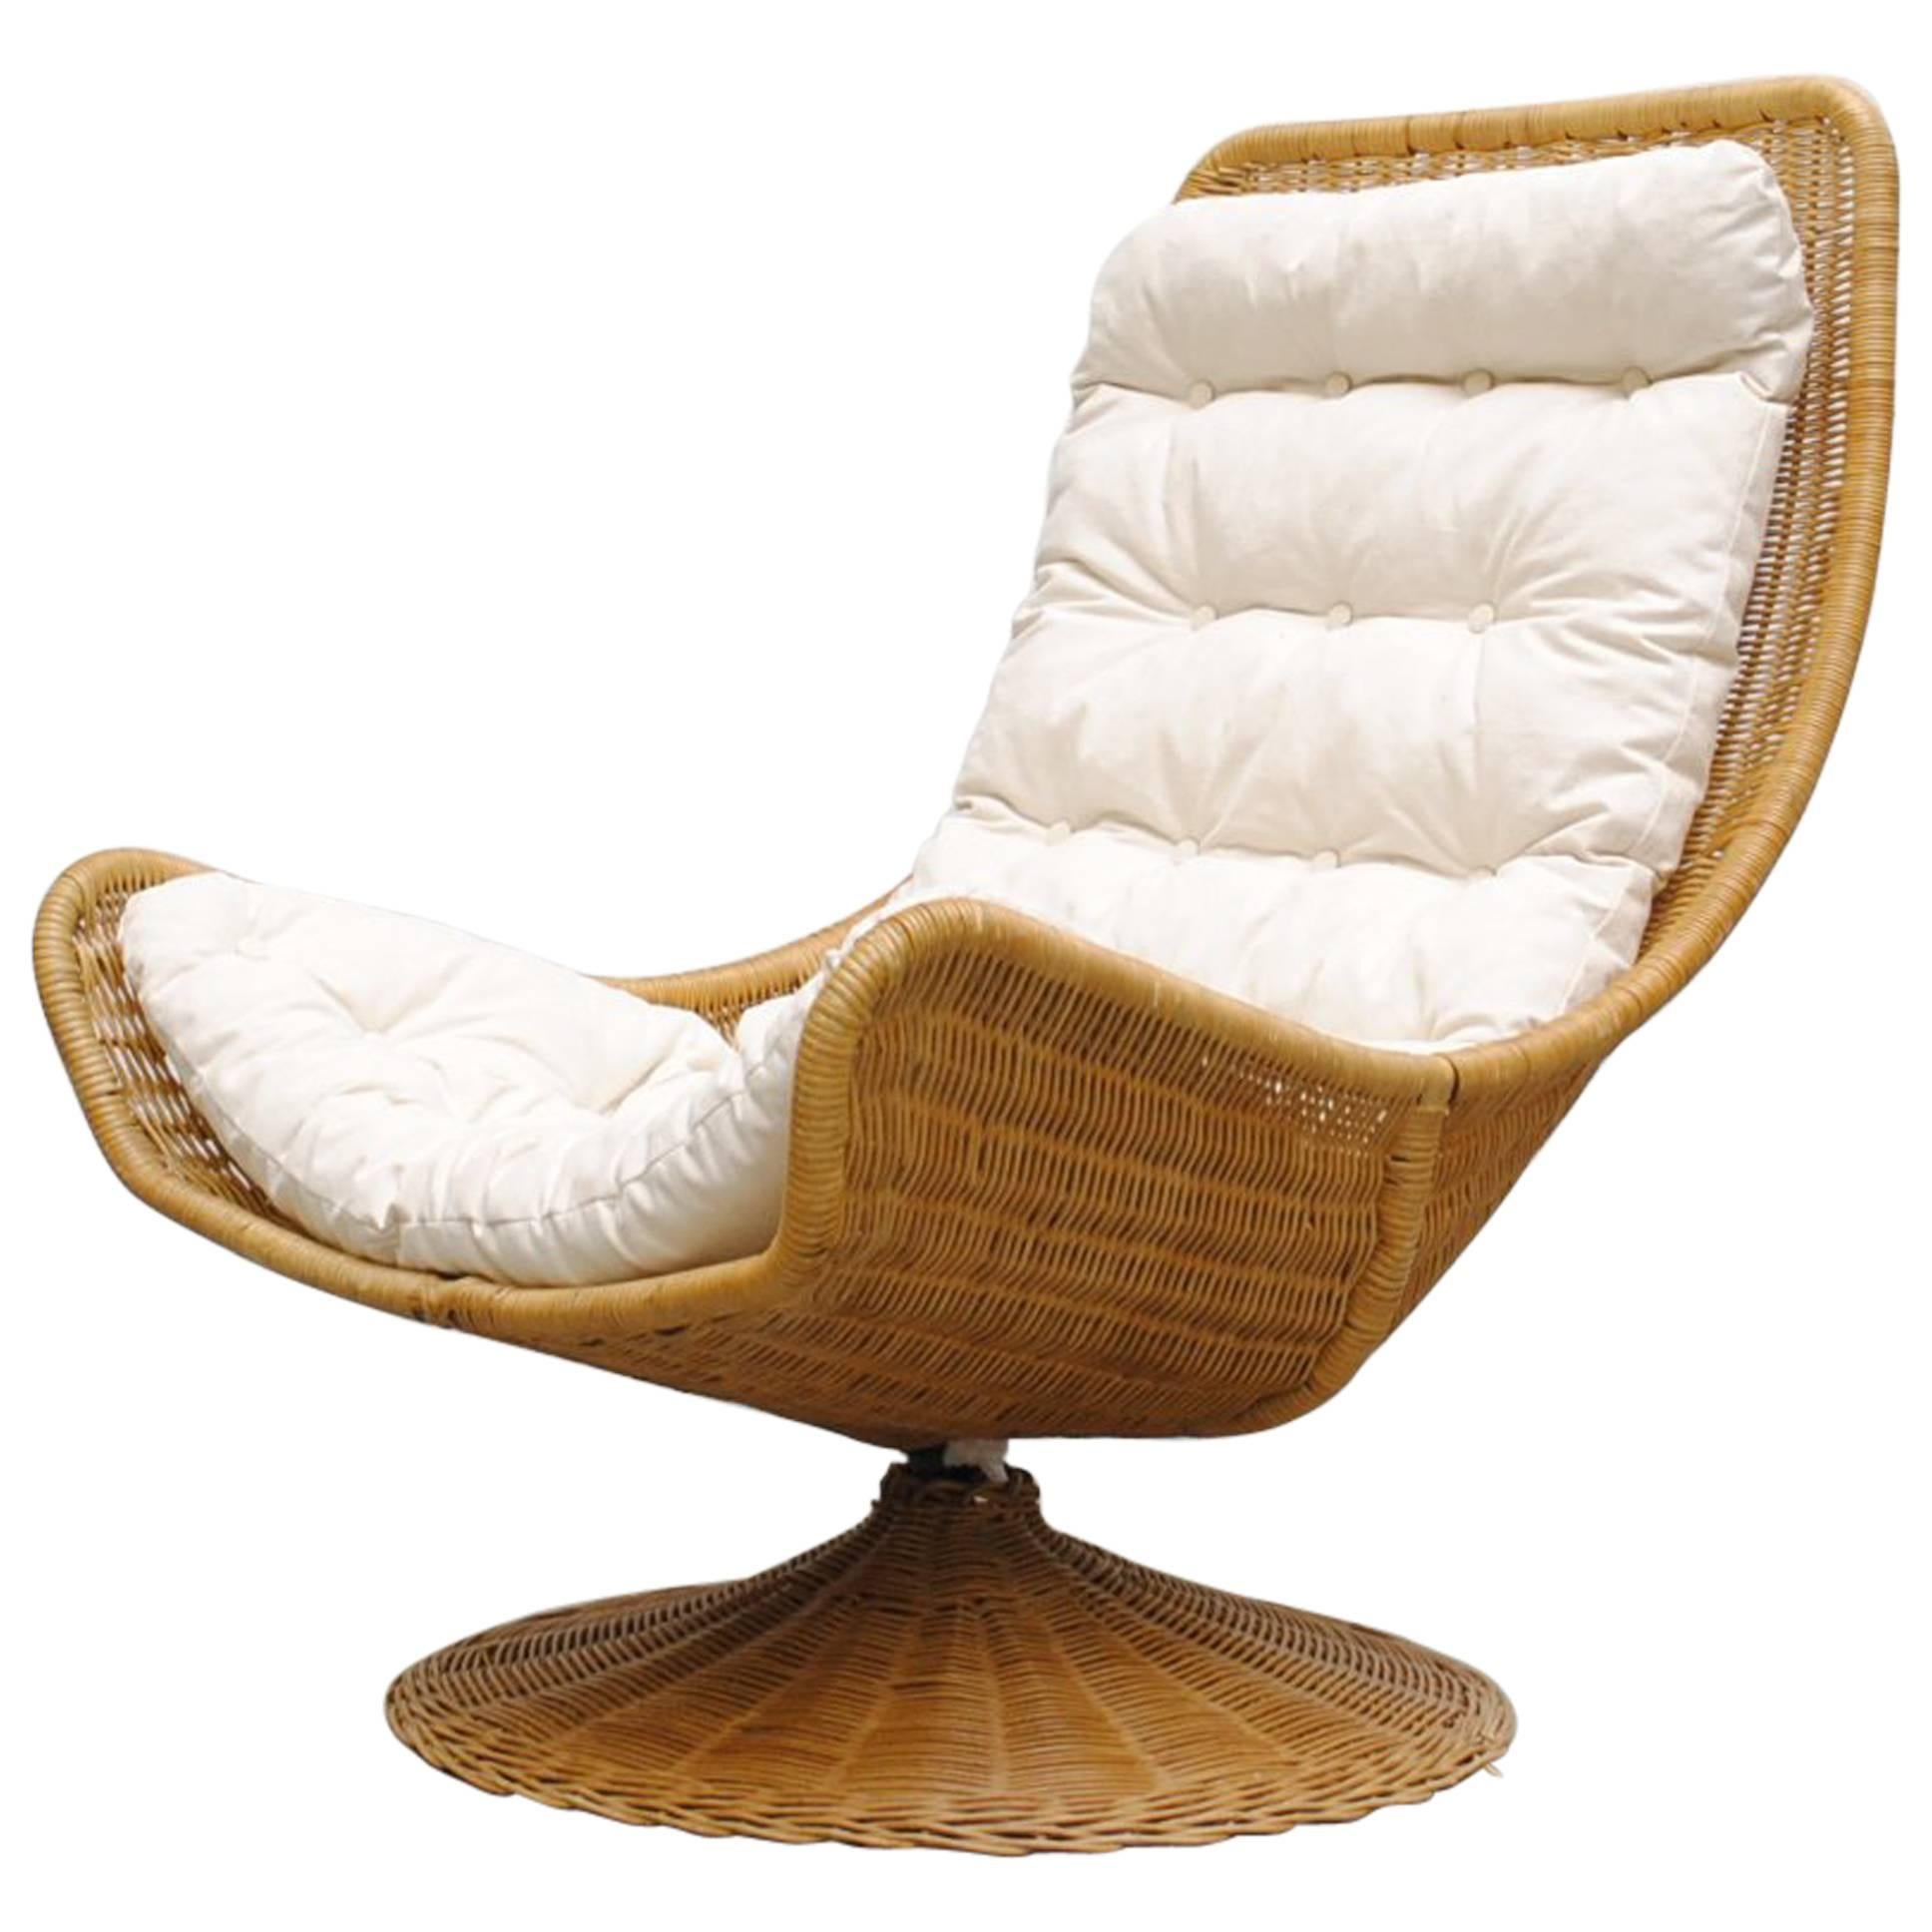 Gerard Van Den Berg Rattan Basket Chair with Natural Canvas Cushion